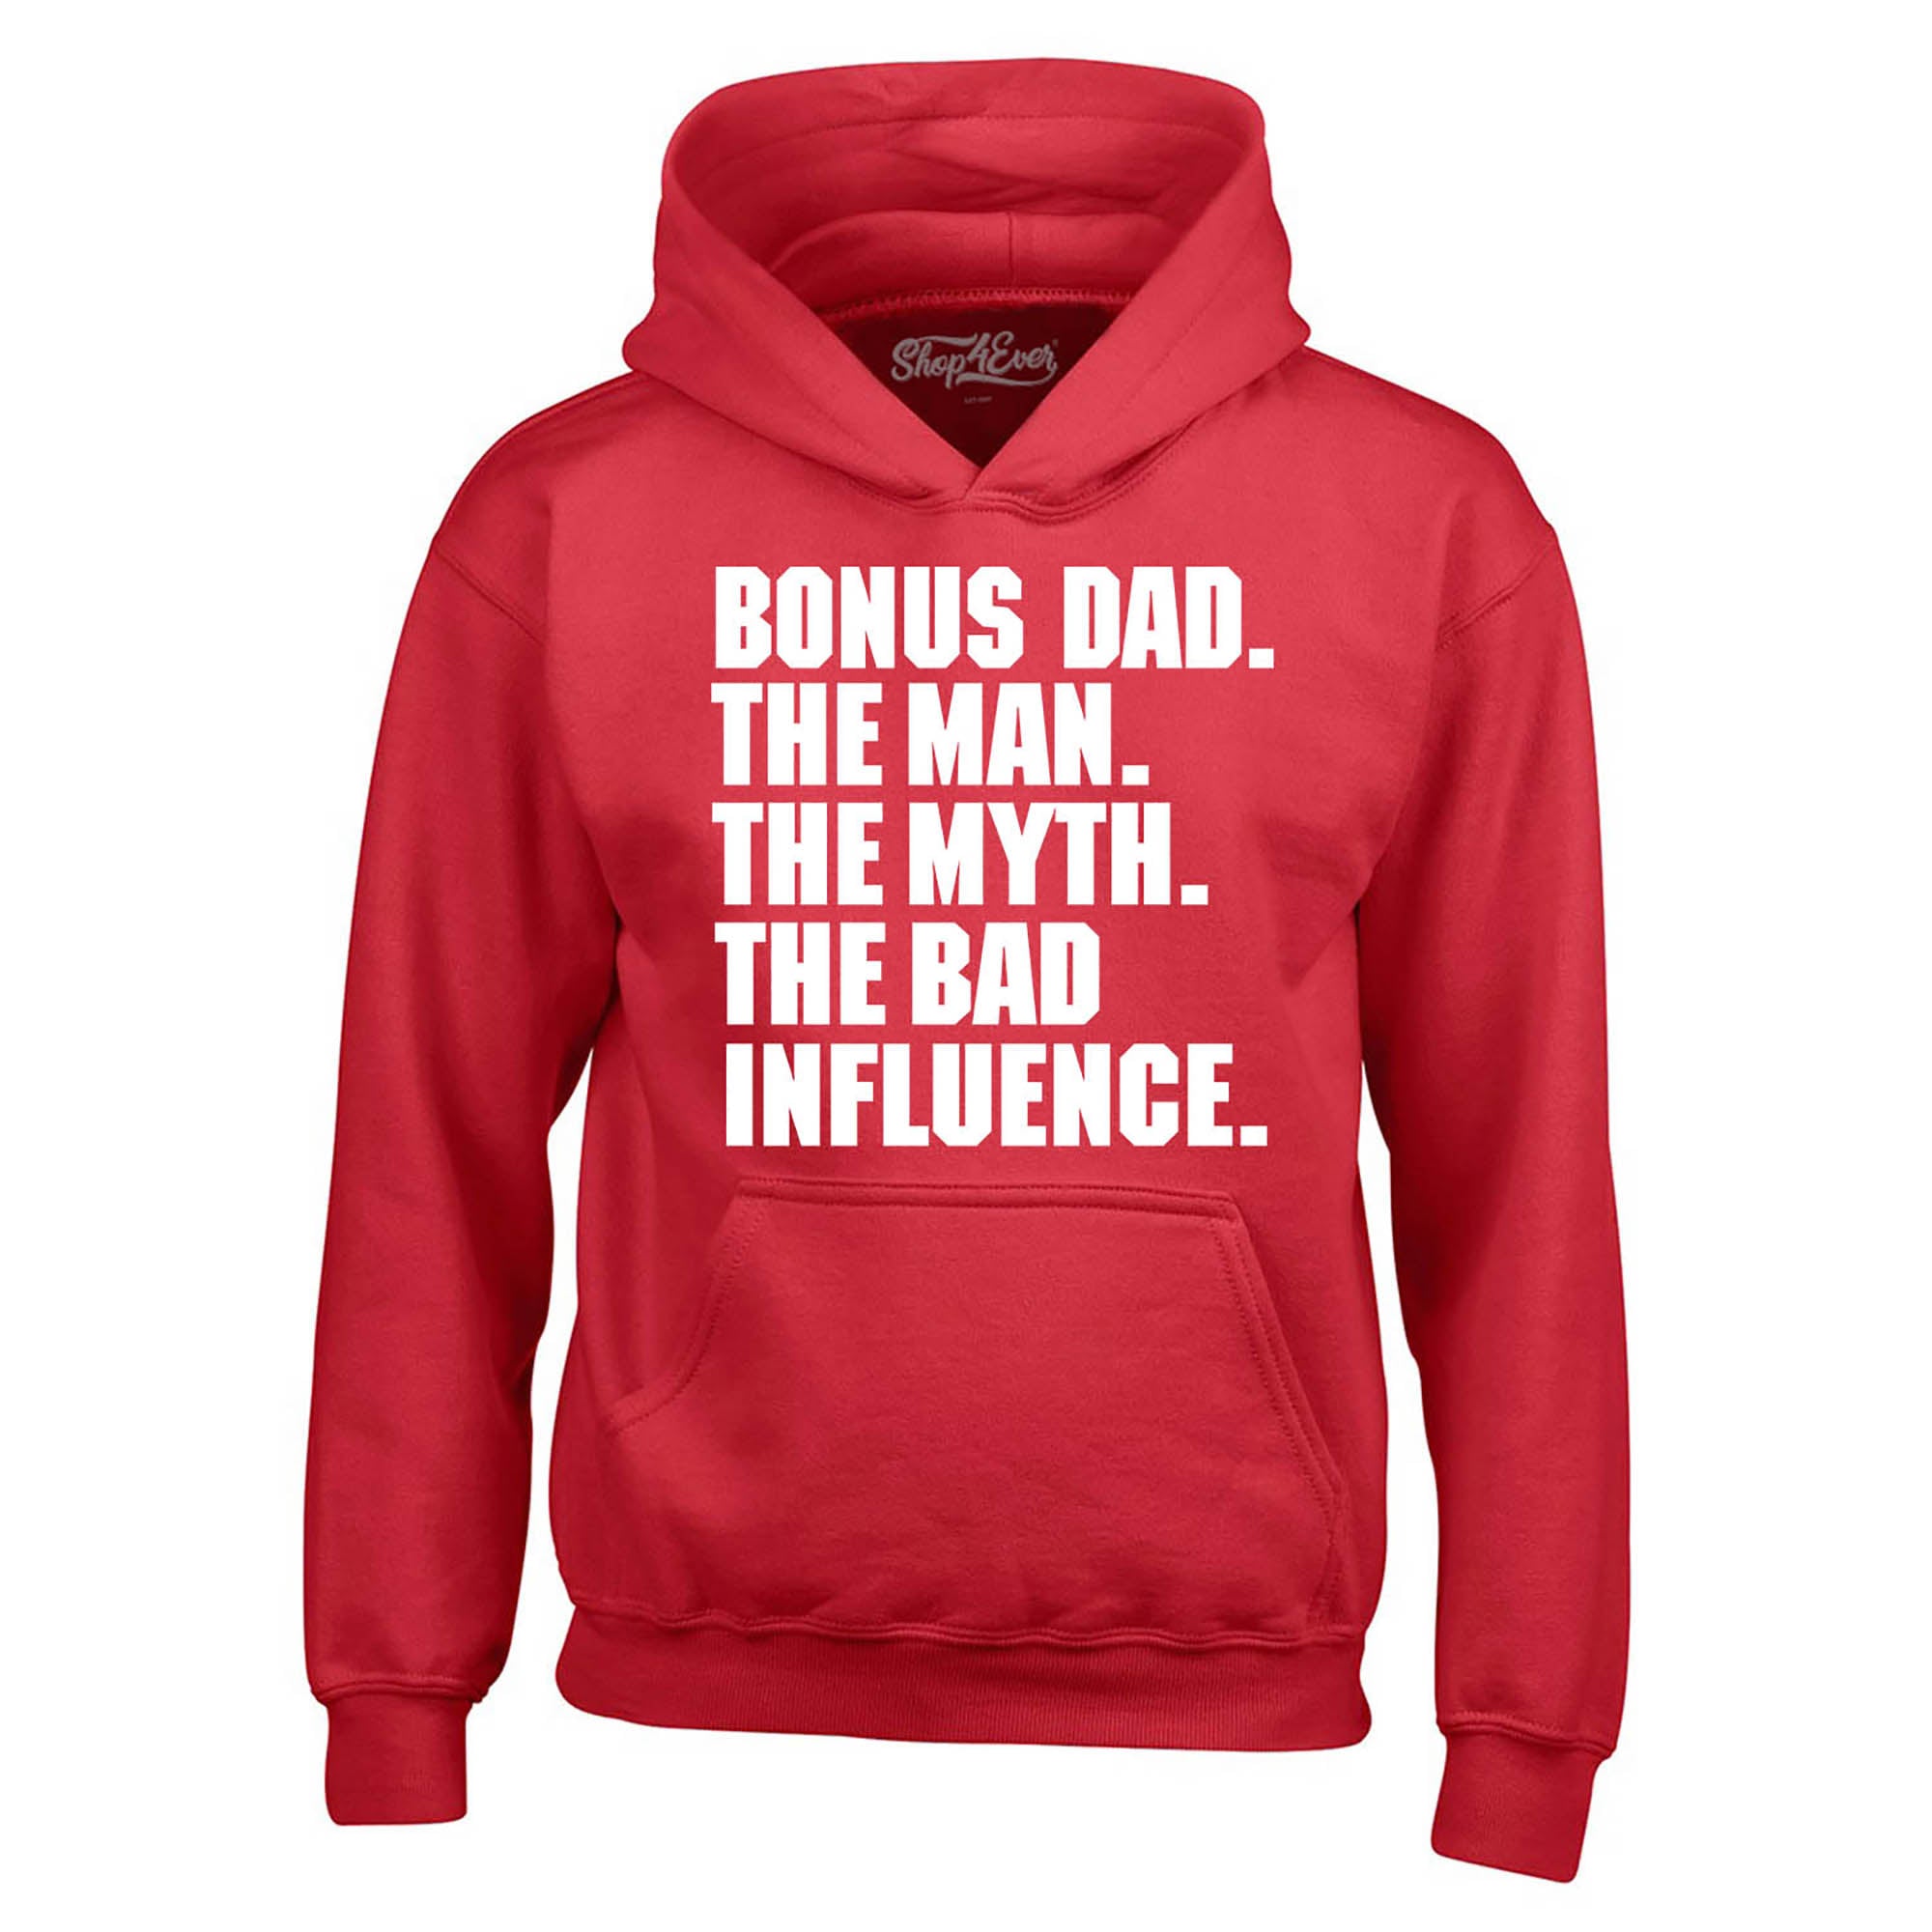 Bonus Dad The Man The Myth The Bad Influence Hoodie Sweatshirts